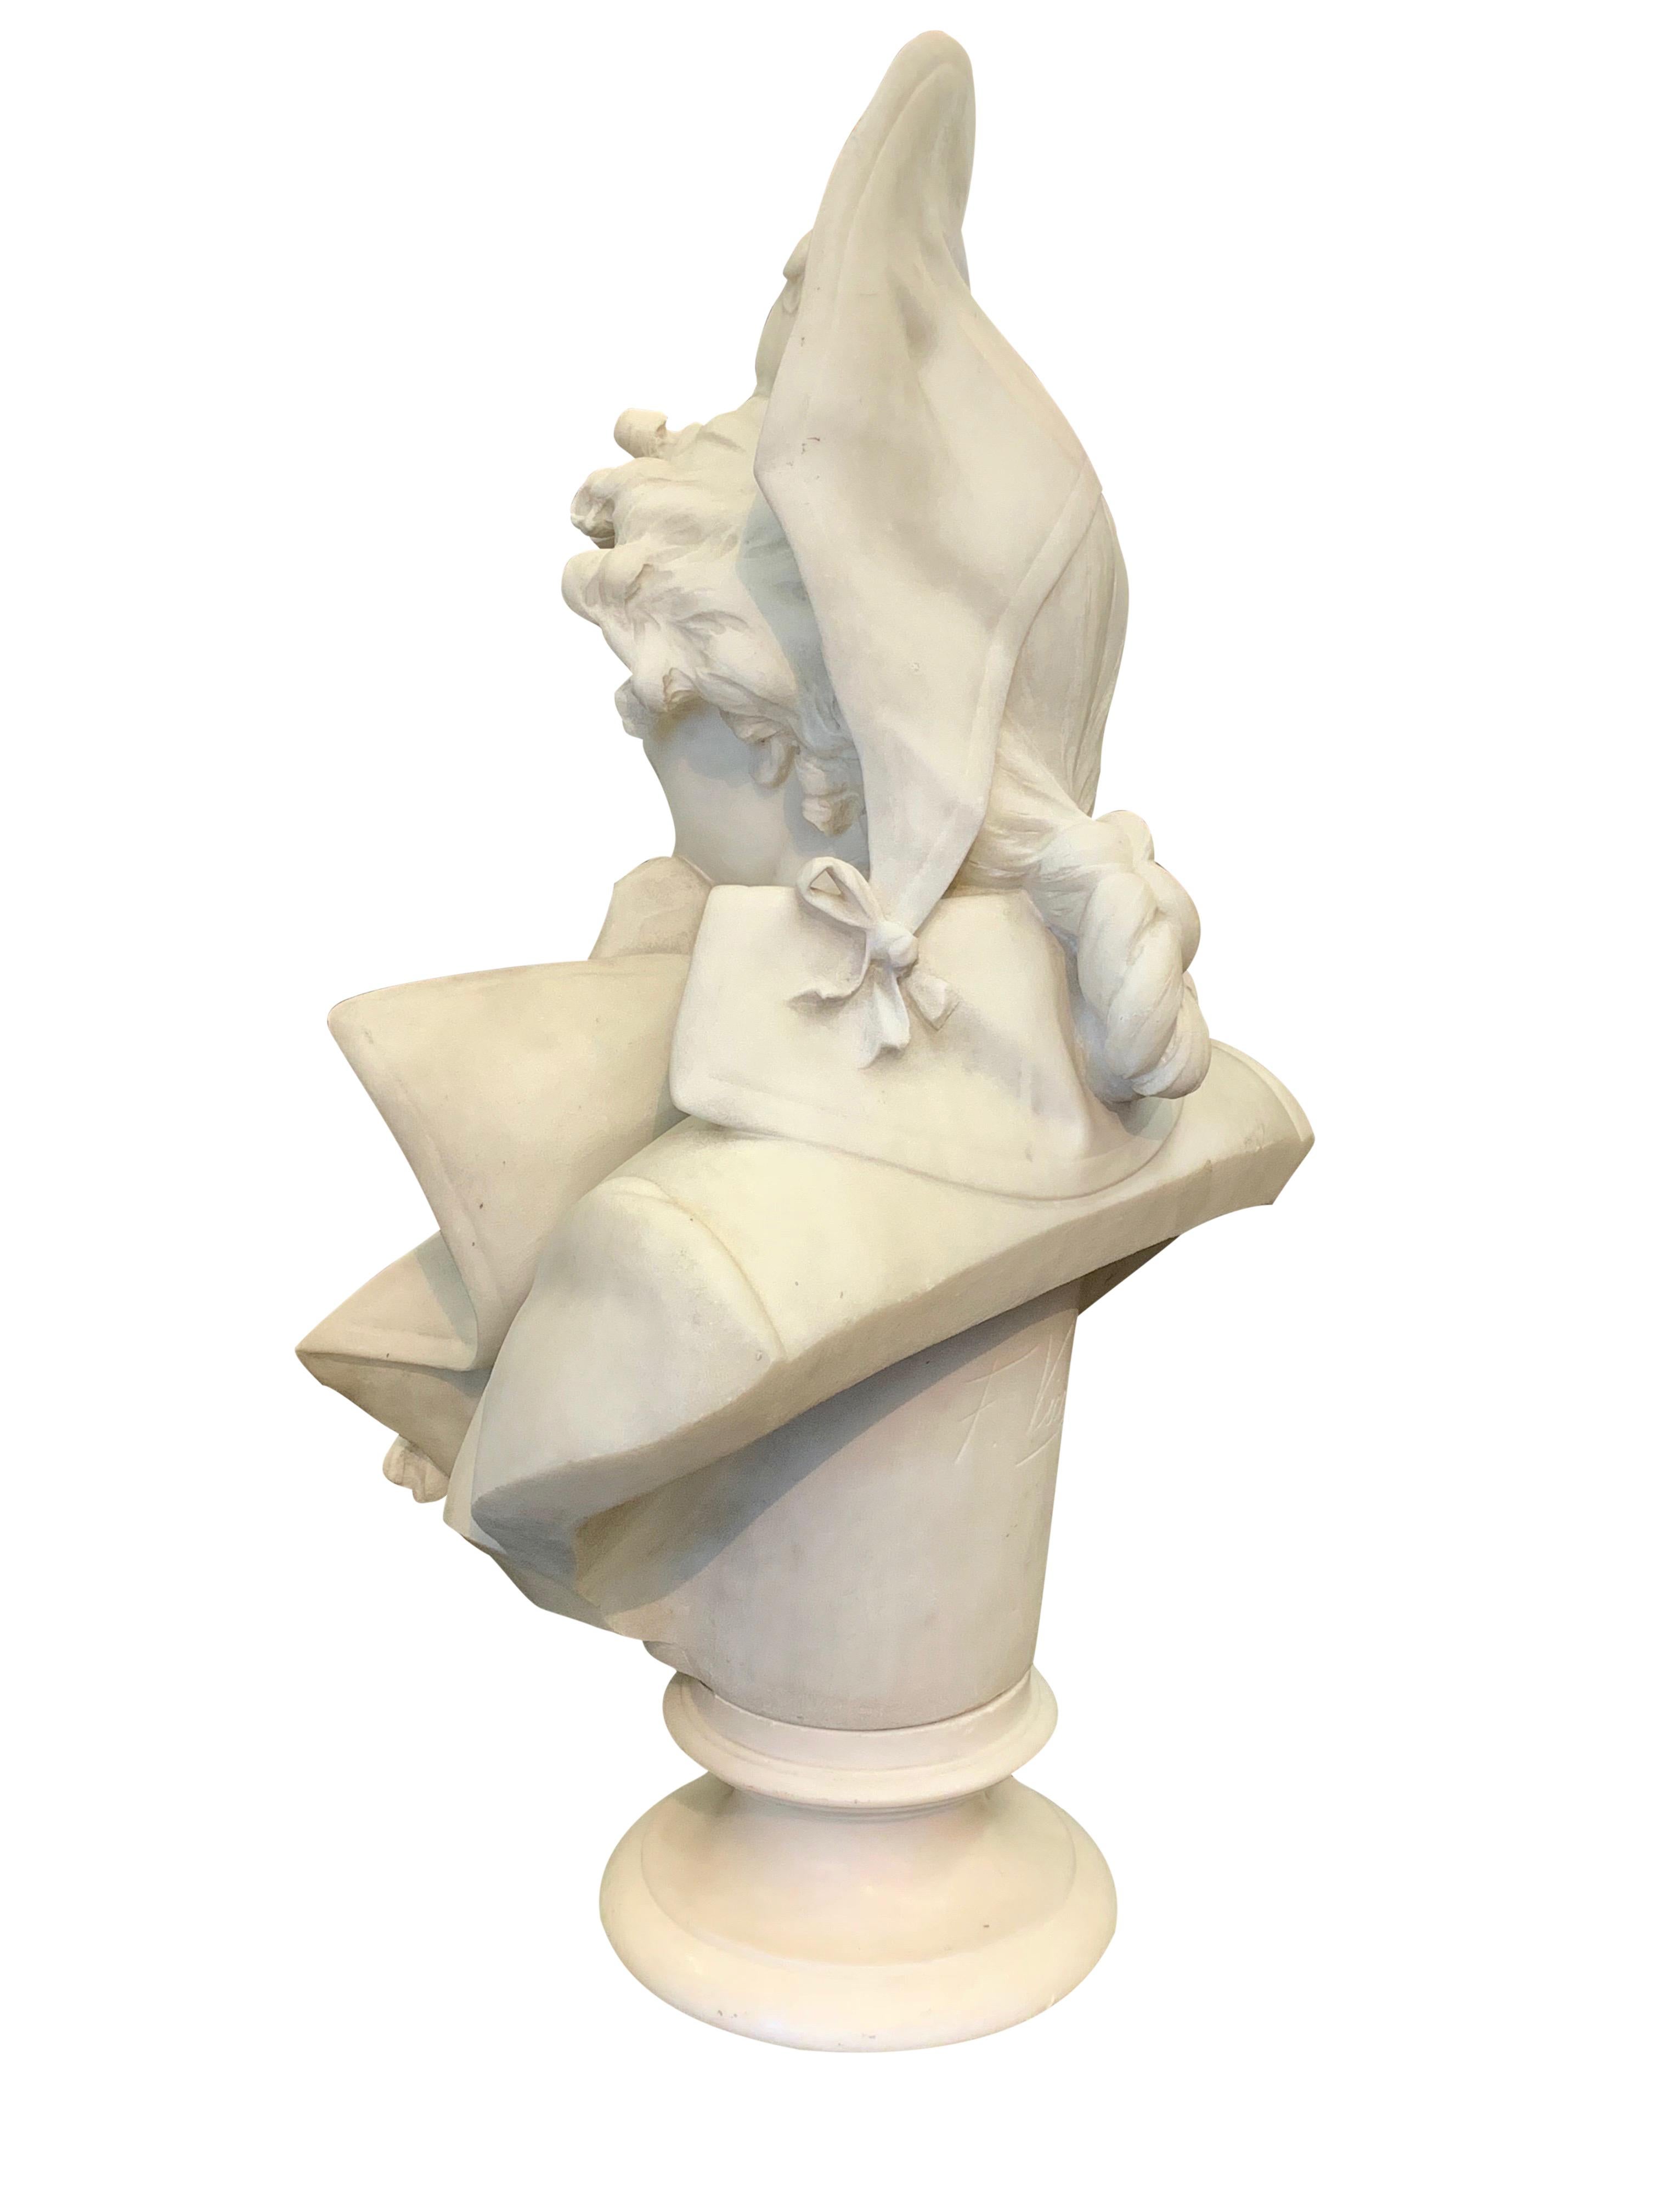 Antique Italian marble sculpture of a smiling lady by Ferdinando Vichi 1